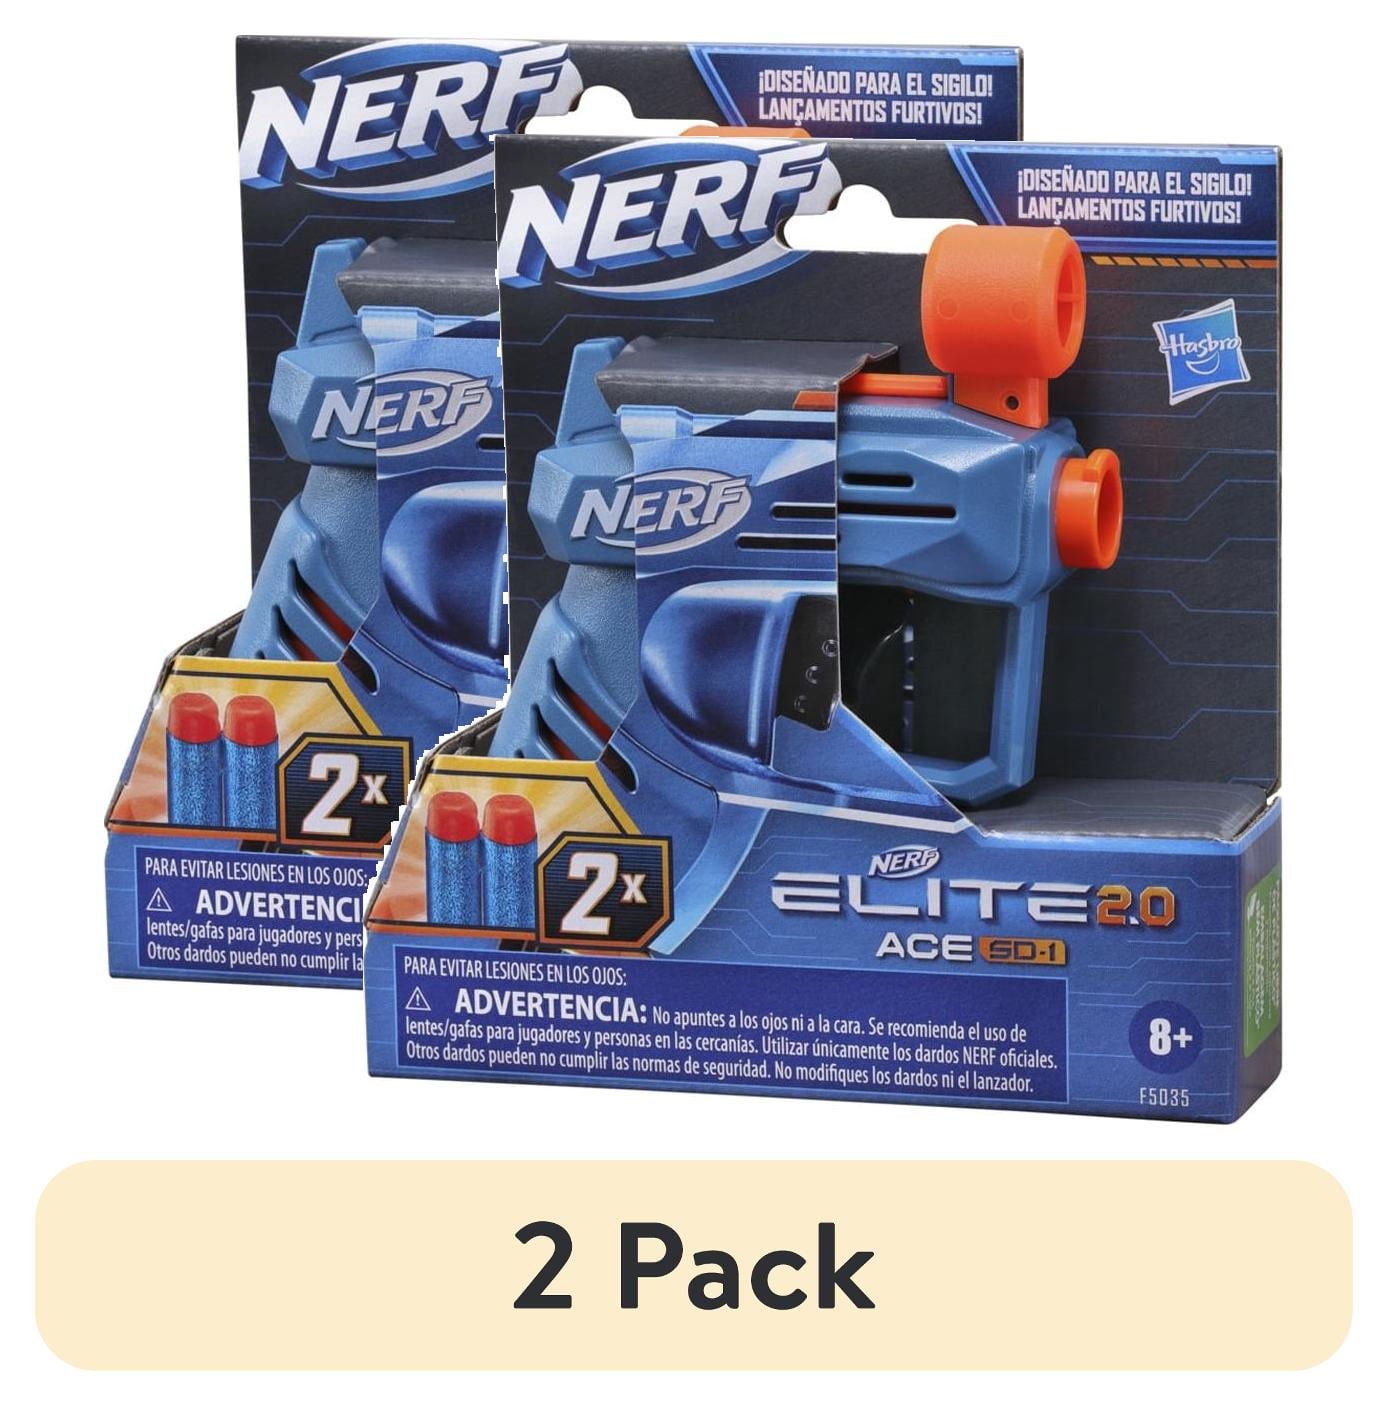 NERF Roblox Jailbreak Armory 2-Pack Blasters 